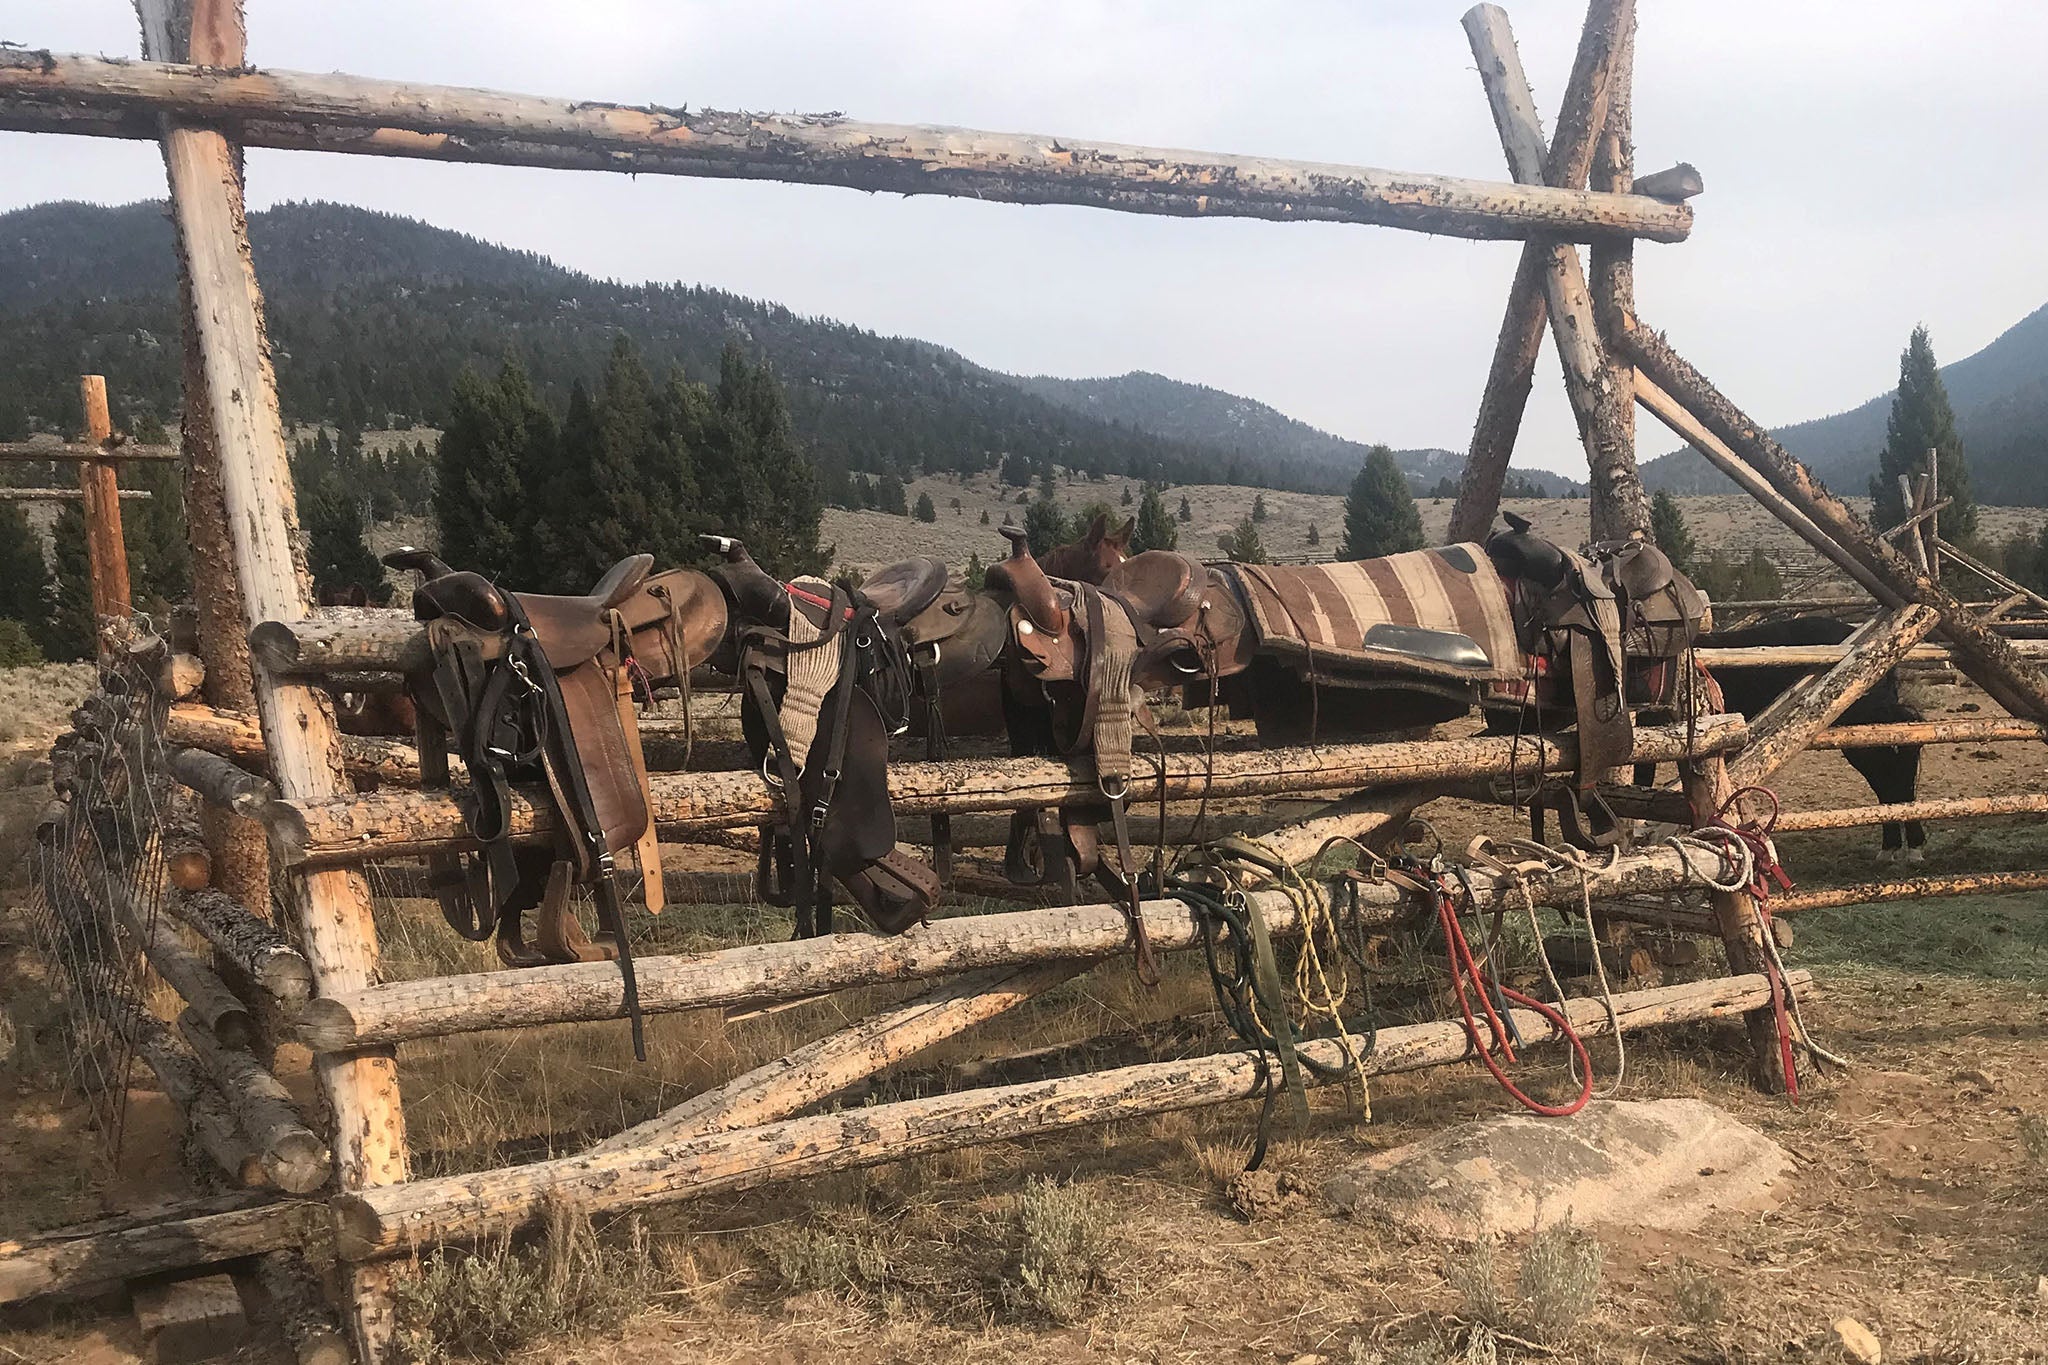 Western Saddles on a Fence 